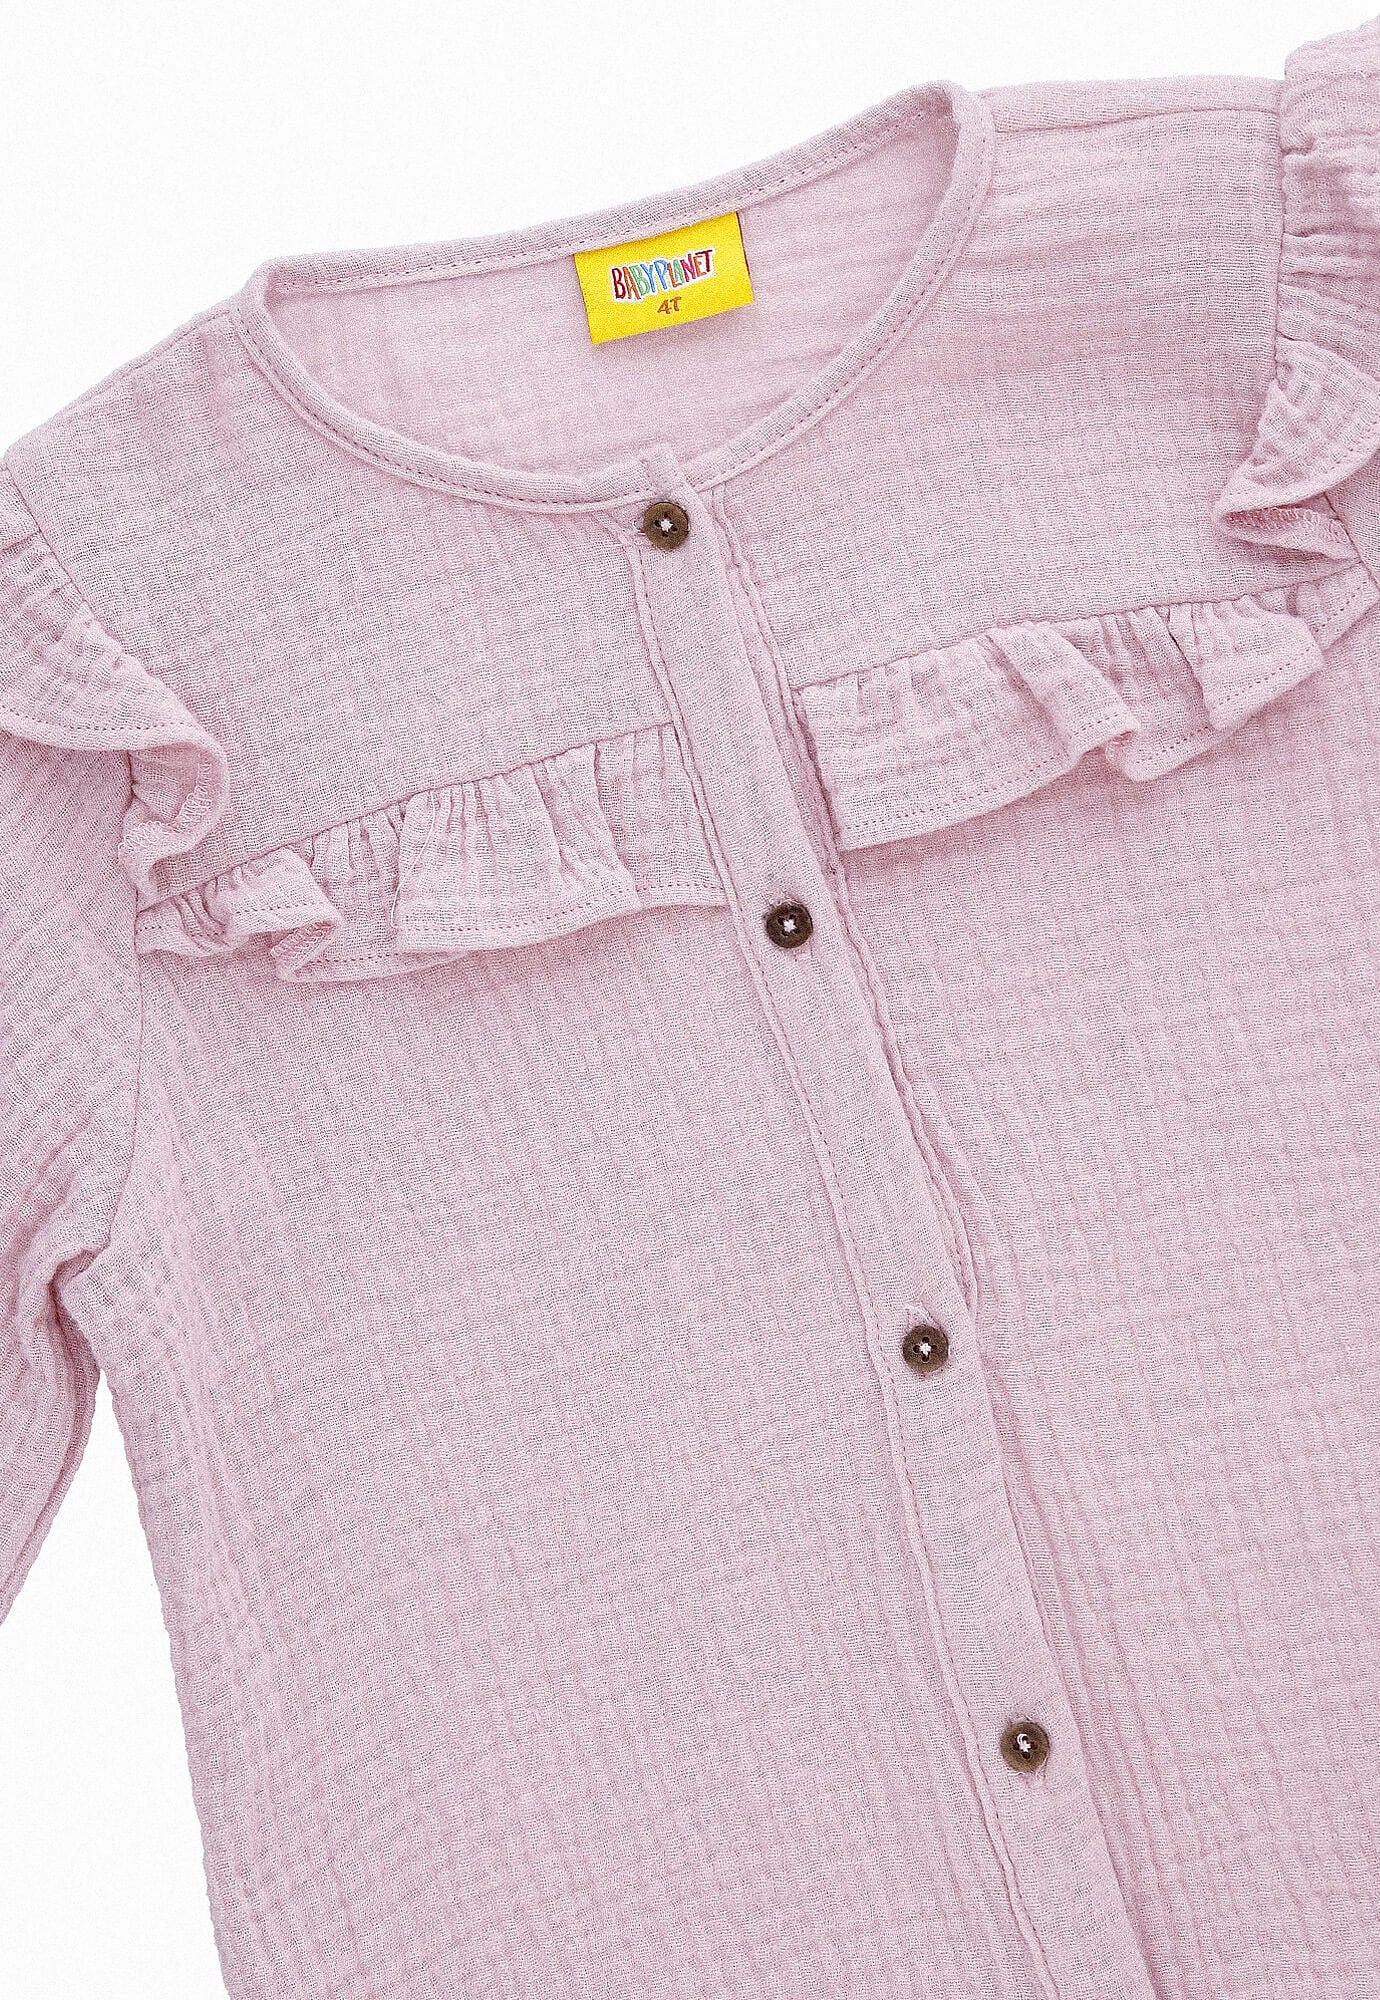 Camiseta piel de melocotón manga larga con escote sesgado y bolero en manga sisa para bebé niña